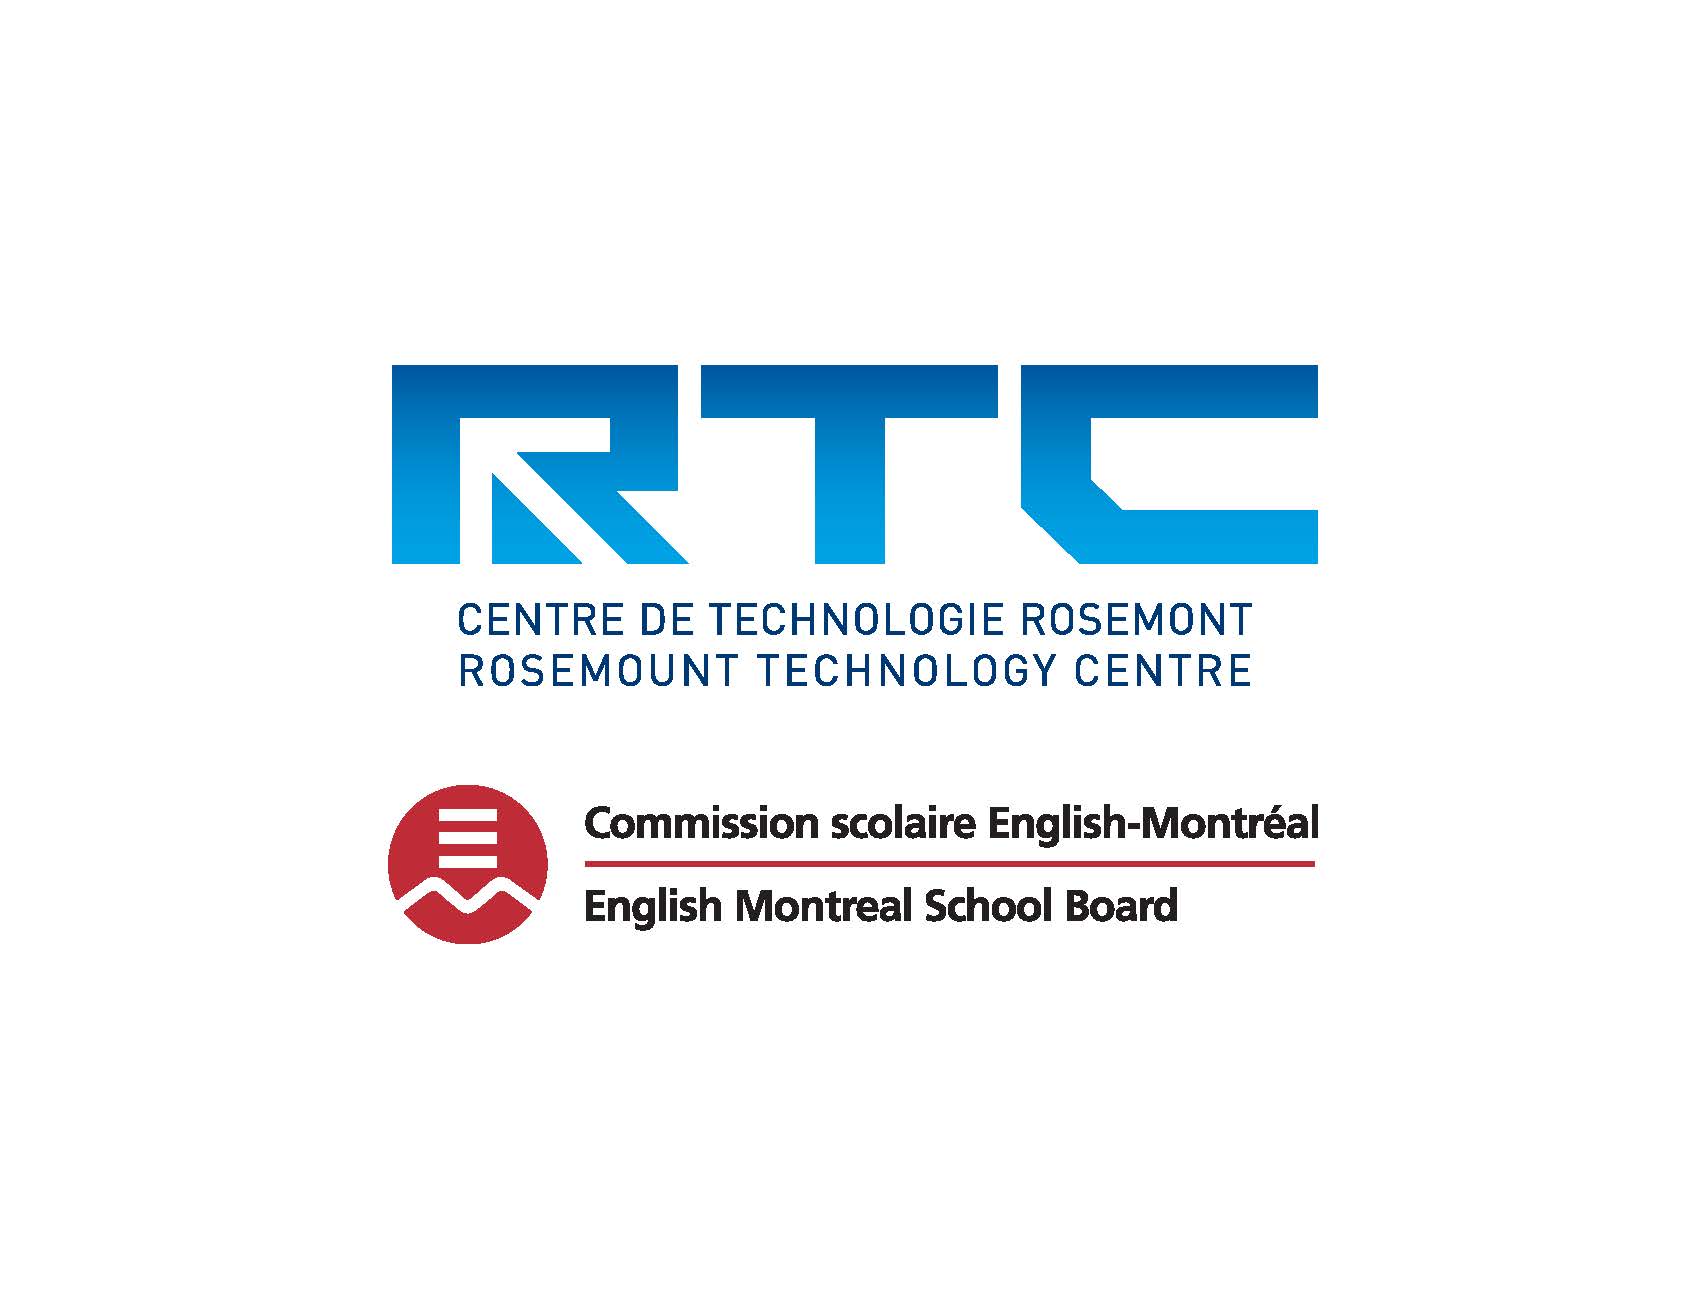 Rosemount Technology Centre